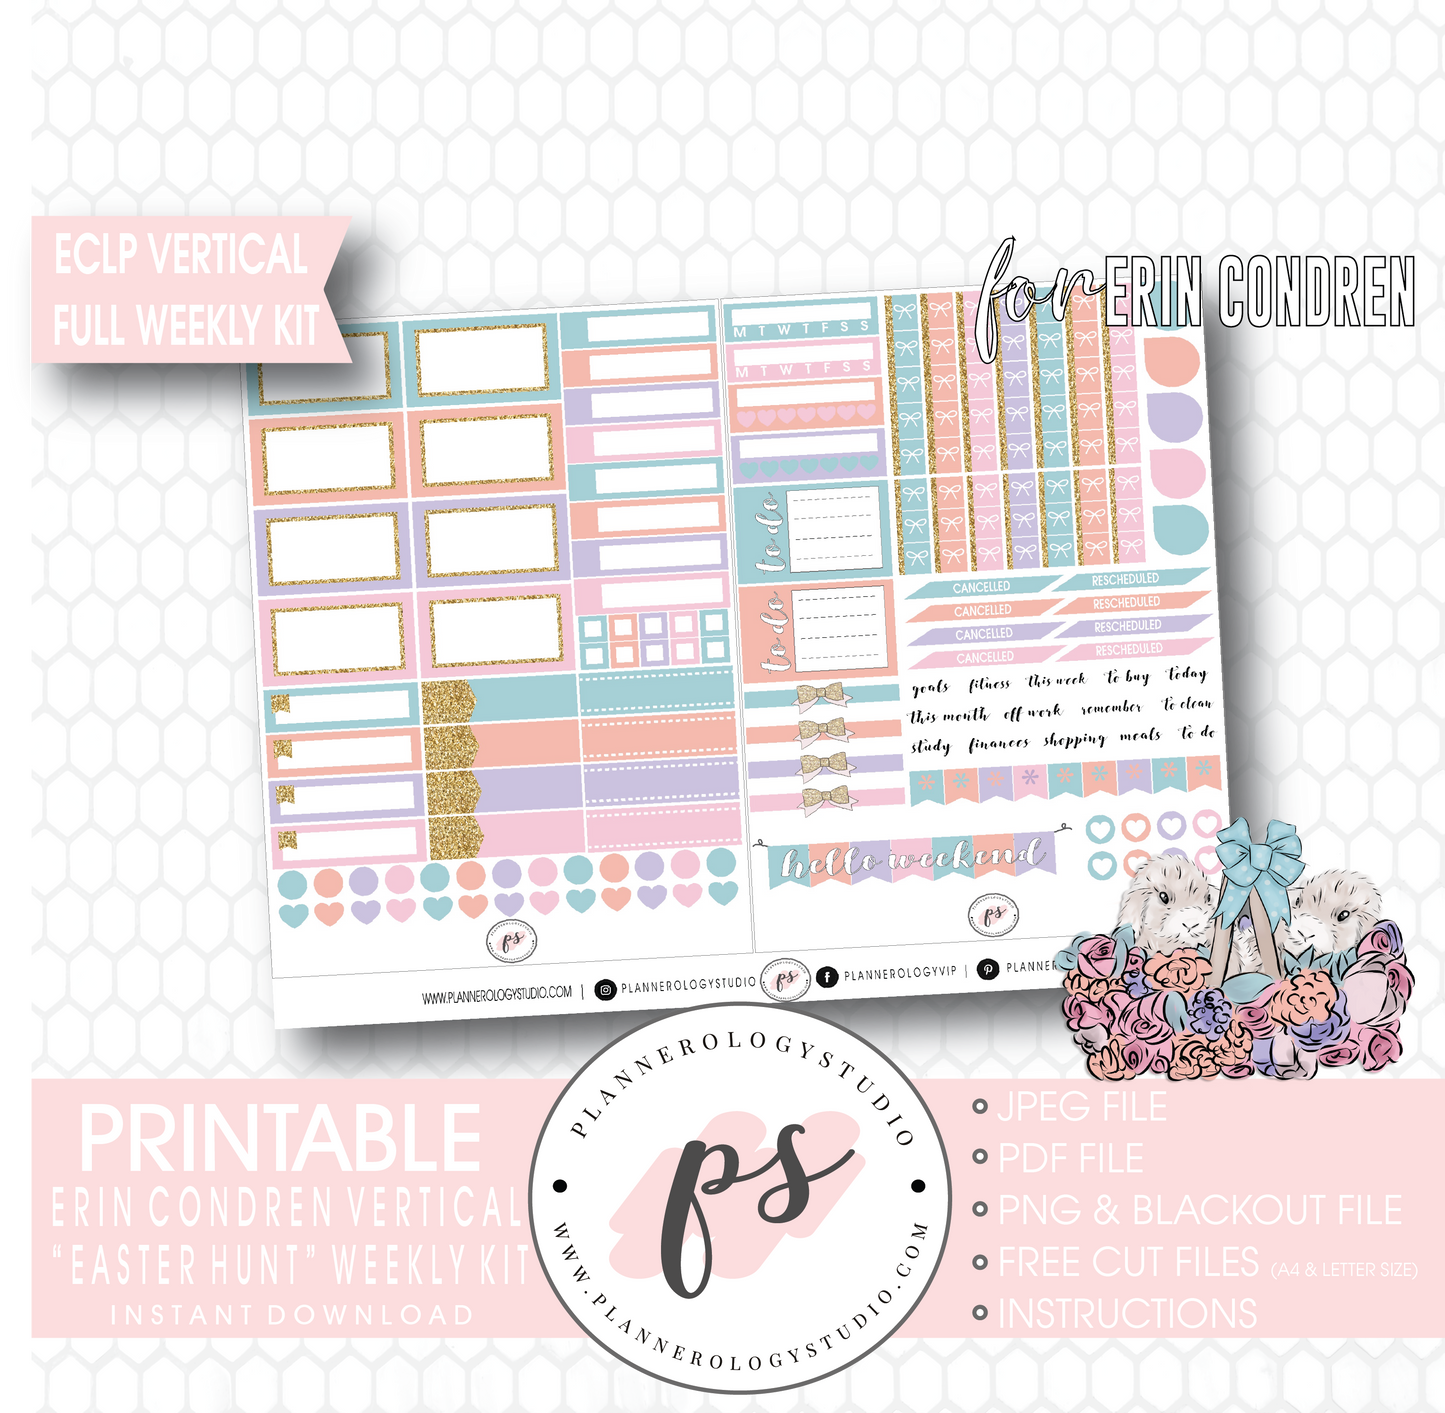 Easter Hunt Full Weekly Kit Printable Planner Digital Stickers (for use with Erin Condren Vertical - Plannerologystudio